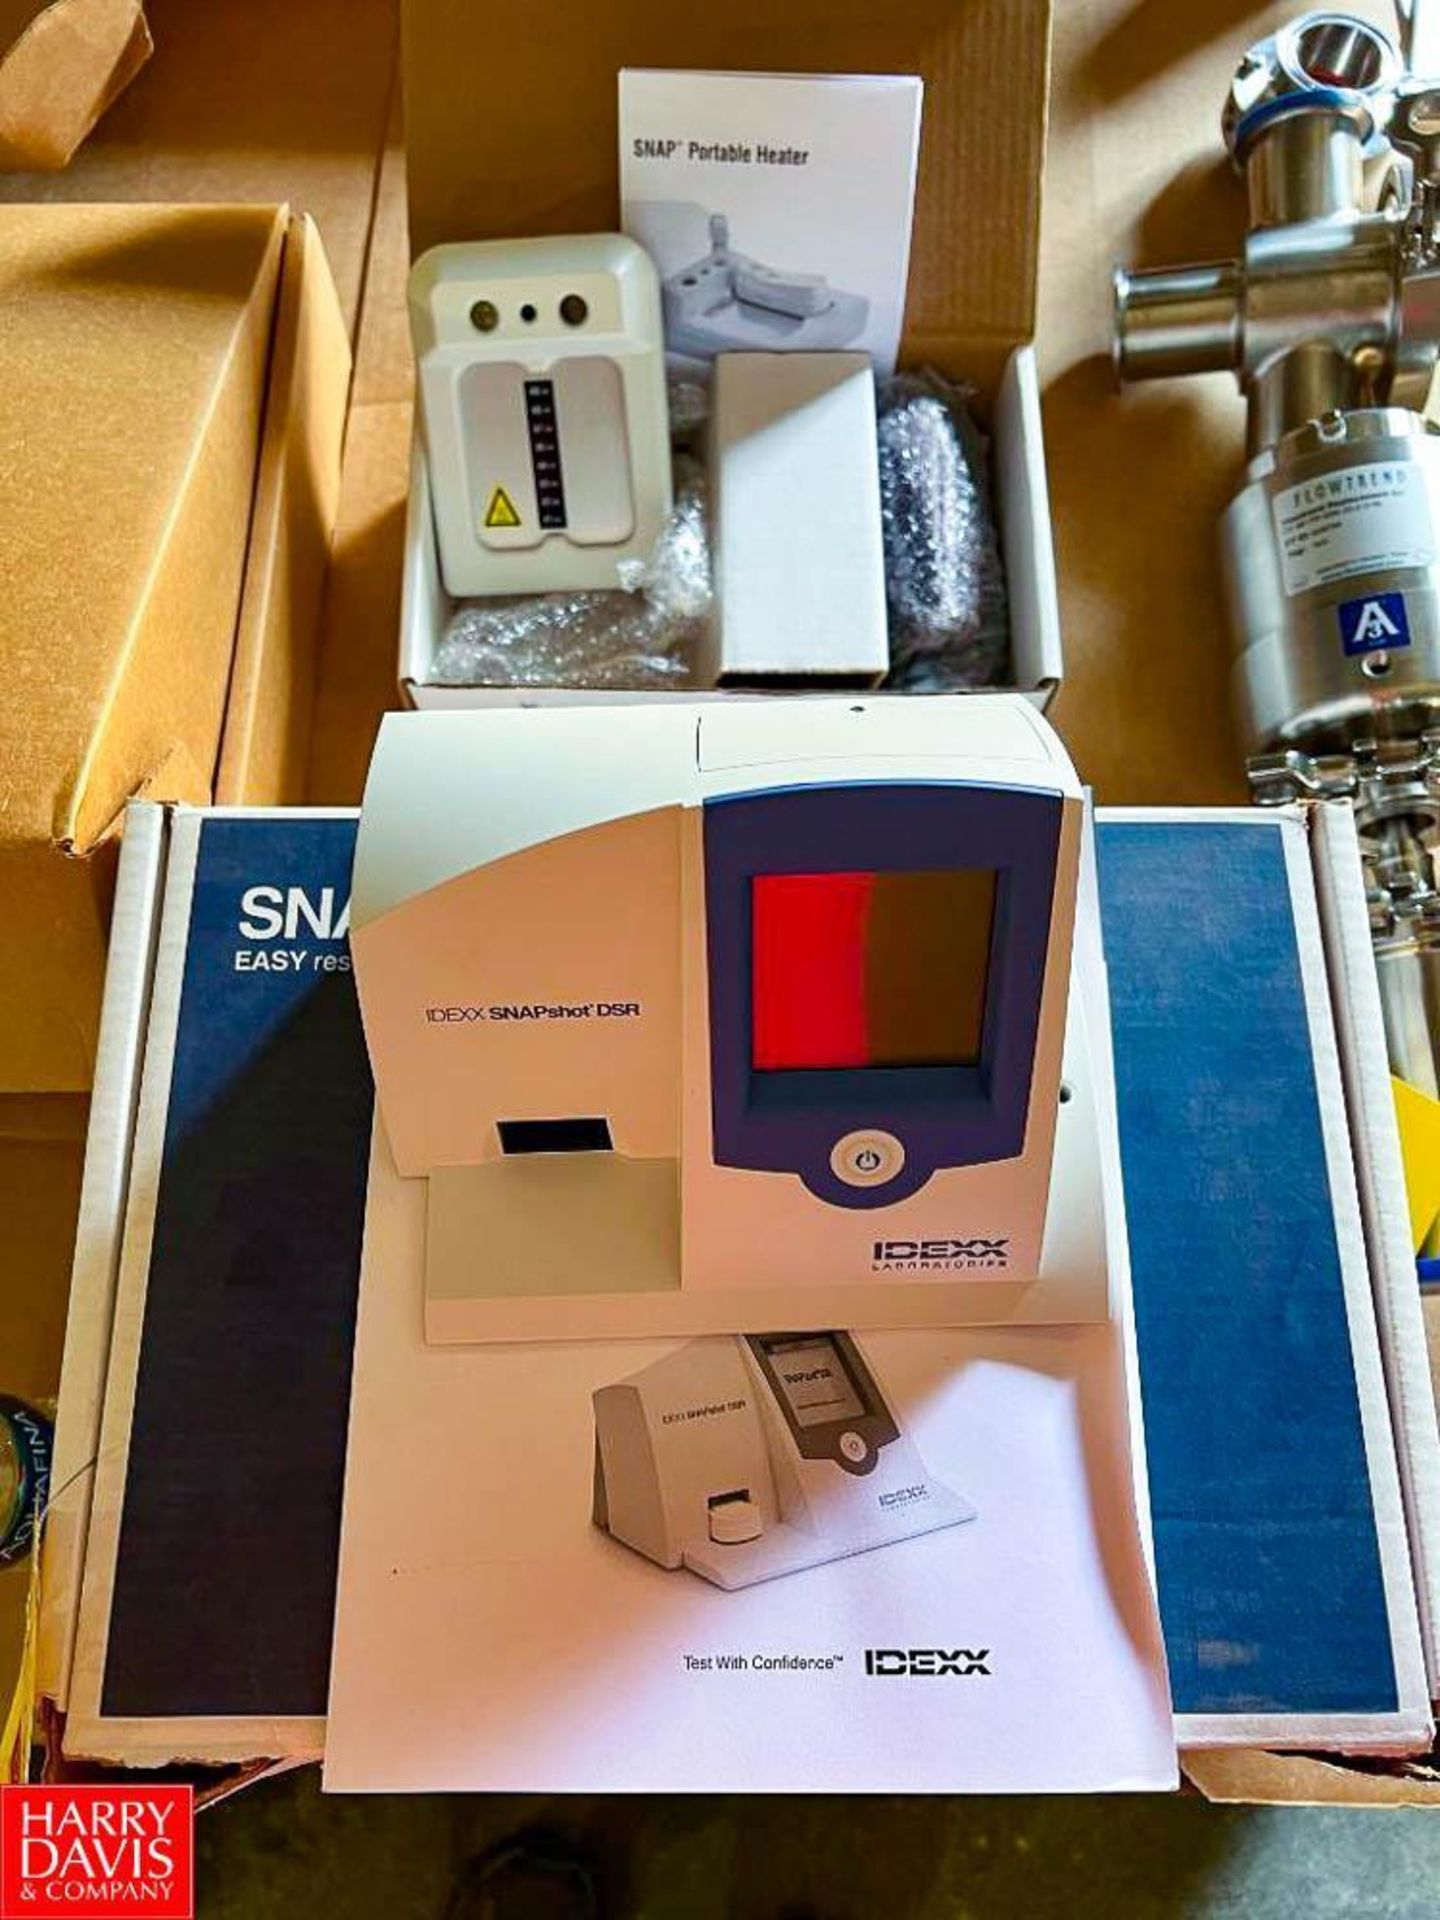 Idexx Laboratories Snapshot DSR and Snap Portable Heater